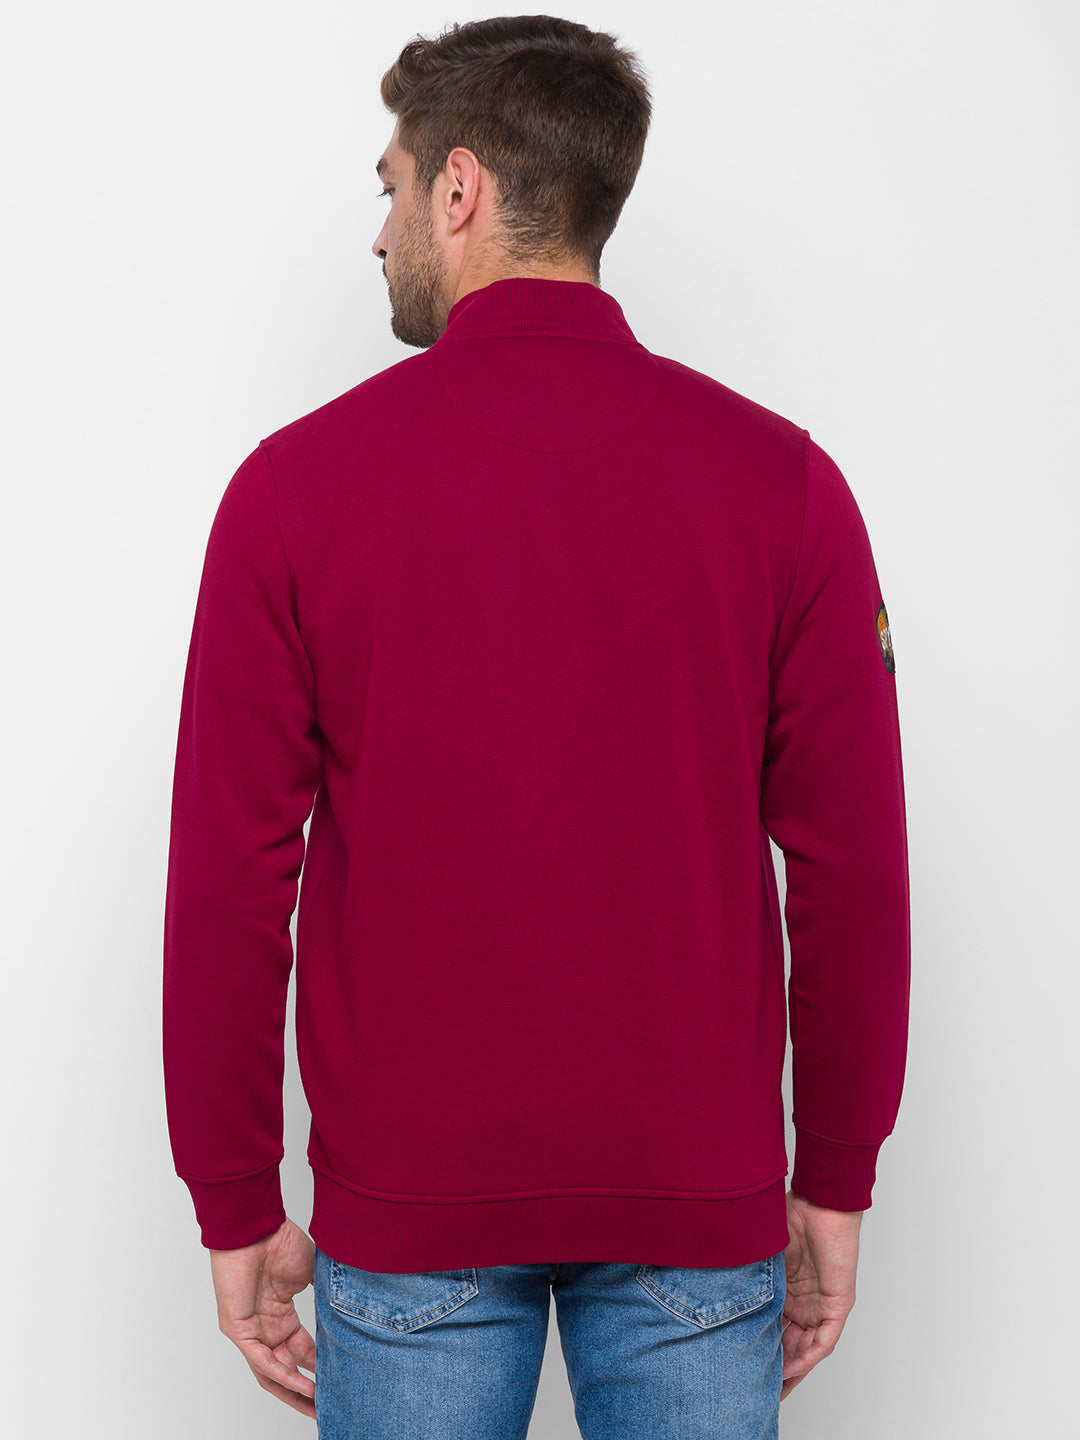 Spykar Purple Cotton Regular Fit Sweatshirt For Men